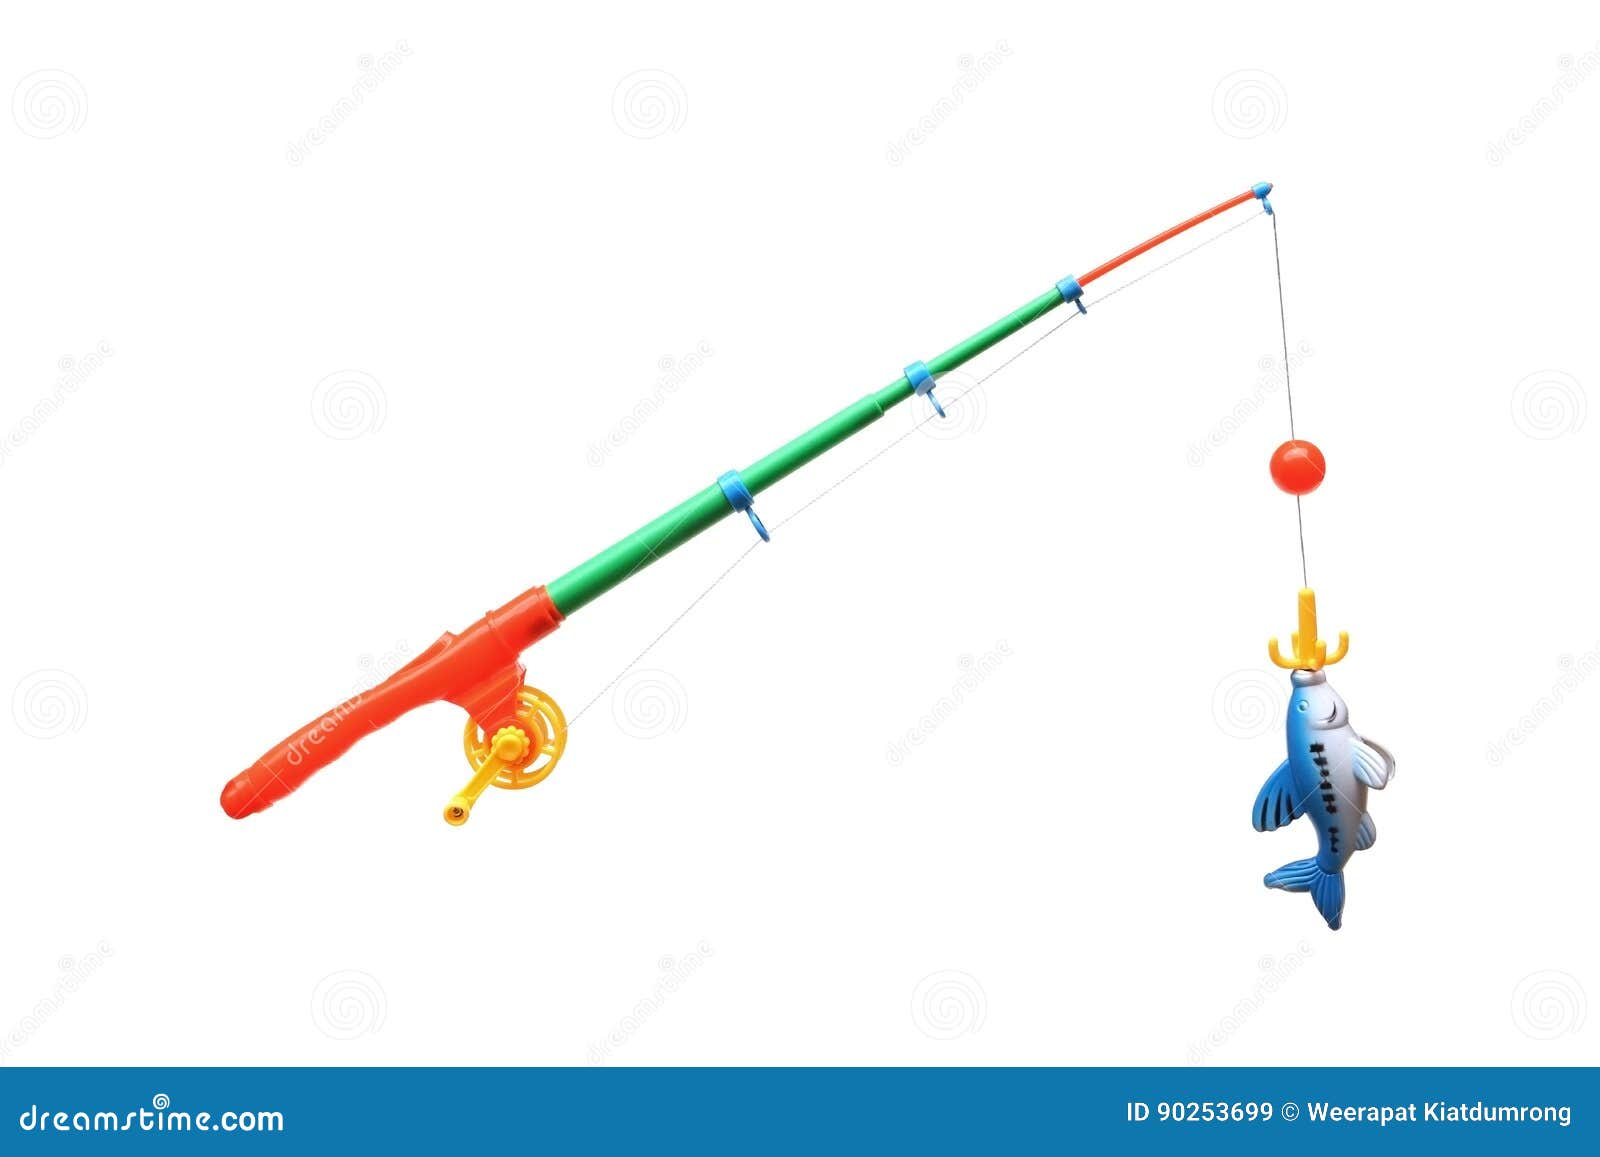 Colorful Plastic Fishing Rod Stock Image - Image of pole, catch